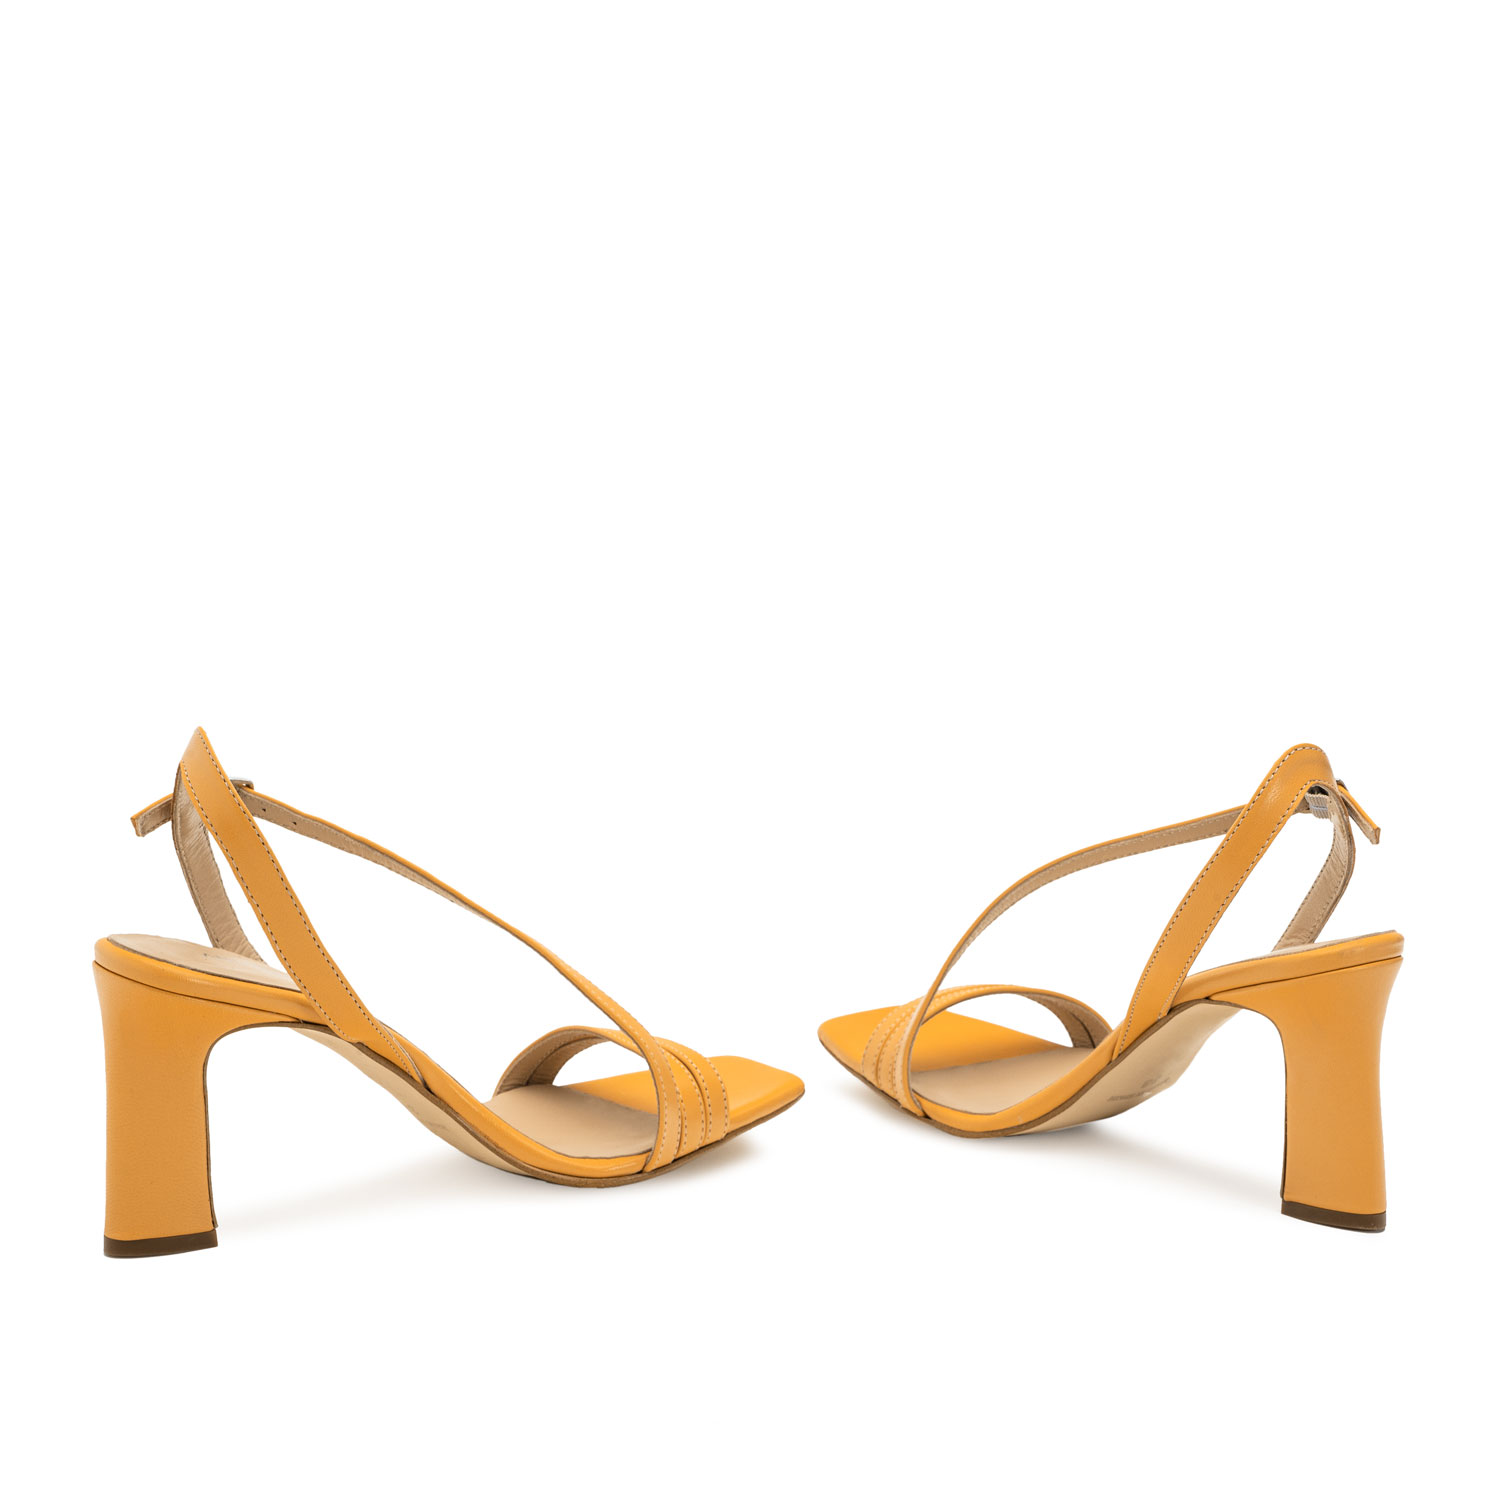 Sandalen aus orangem Leder - MADE IN SPAIN - 